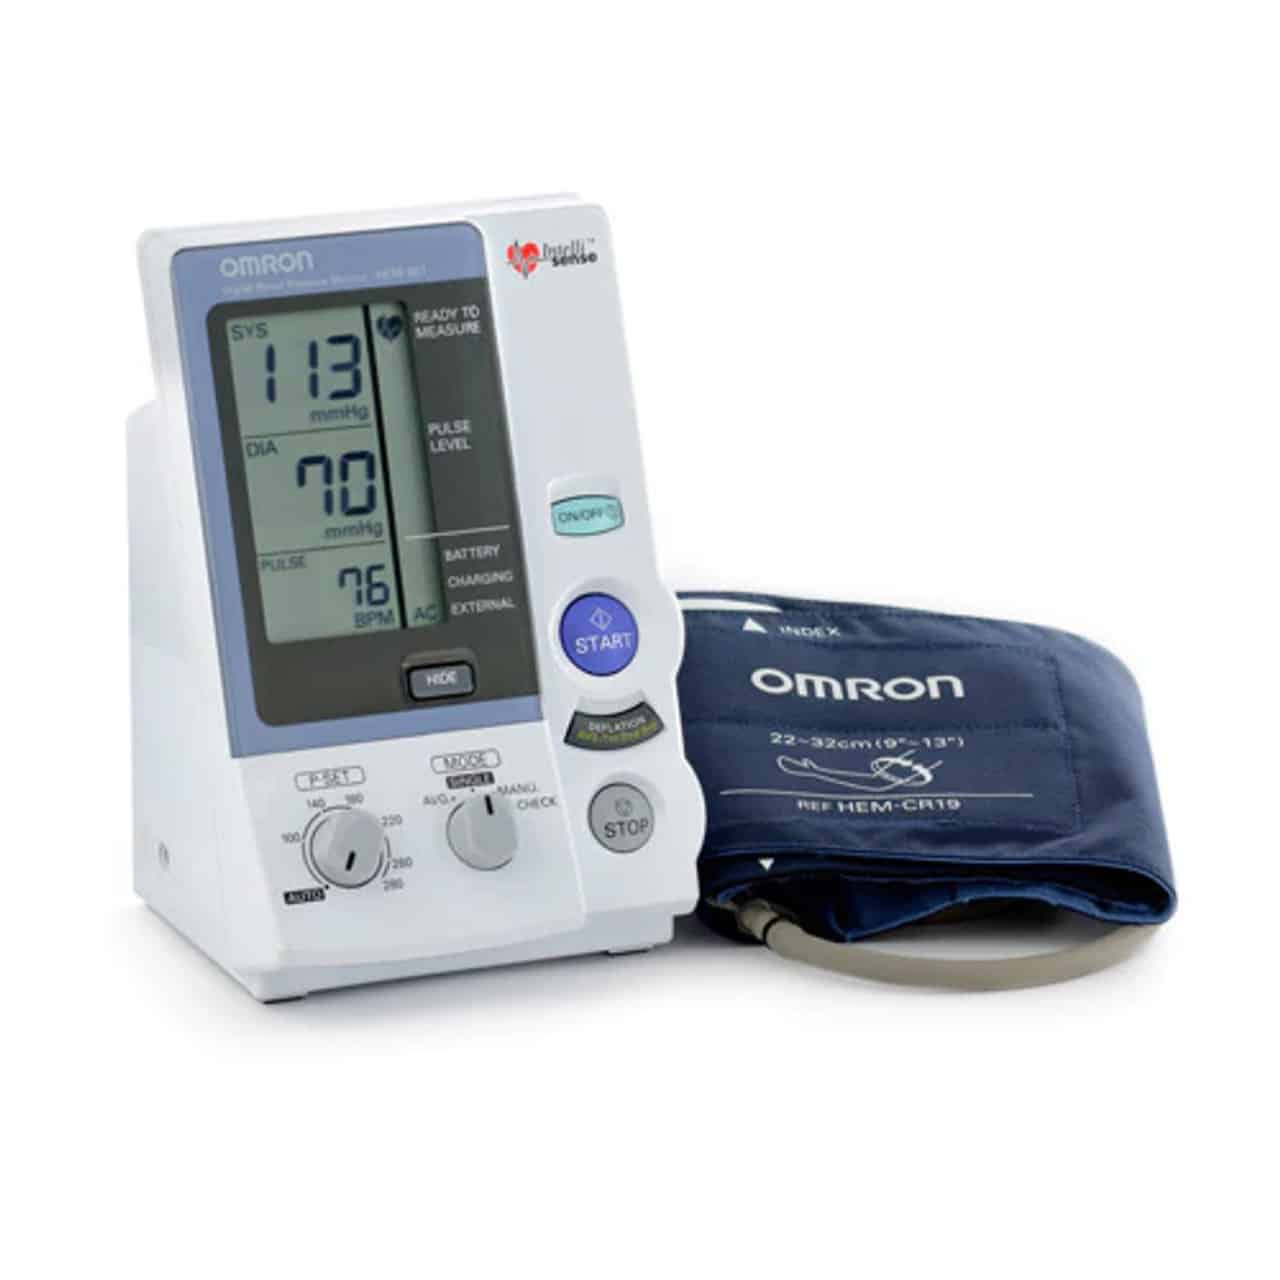 Shop Biofast's High-Quality Blood Pressure Monitors